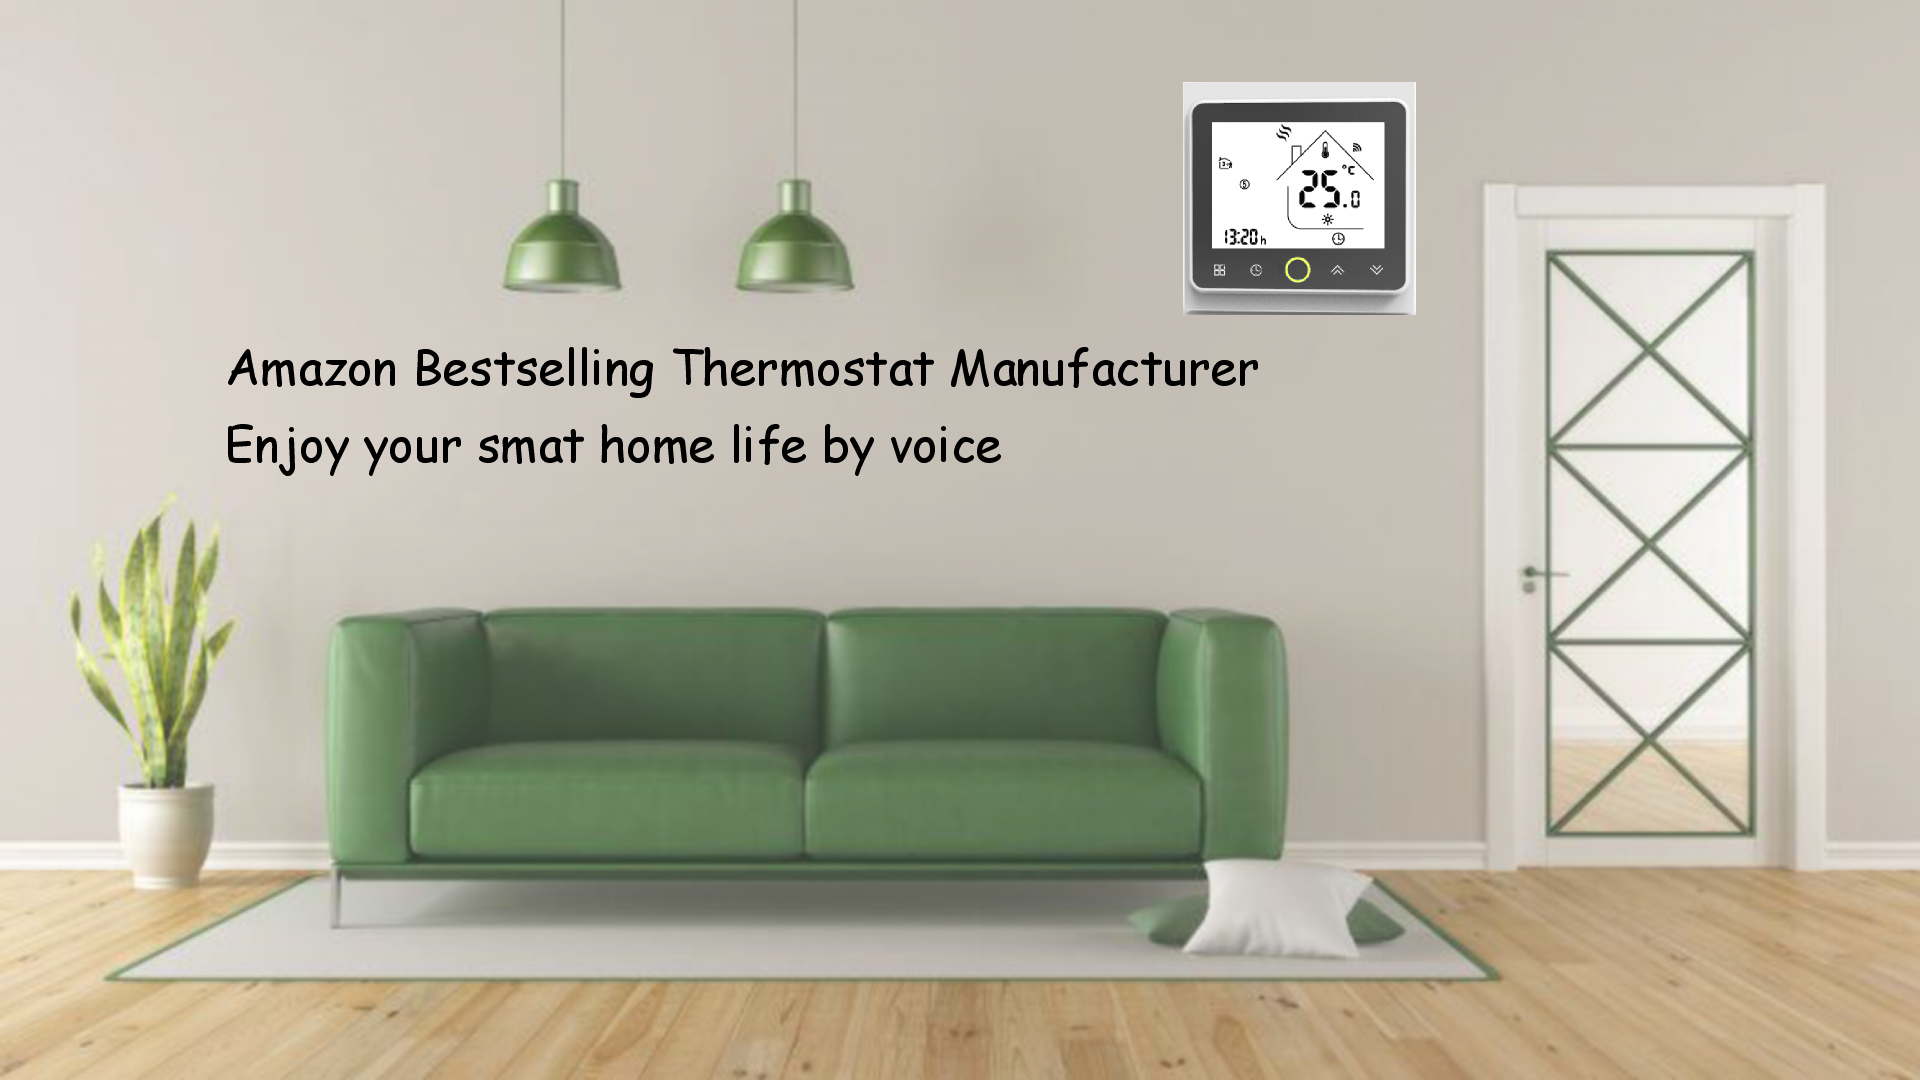 BECA BHT-002 Modbus/RS485 Water Heating/Water Boiler/Gas Boiler/Electric Heating Room Thermostat-Xiamen Beca Energysaving Technology